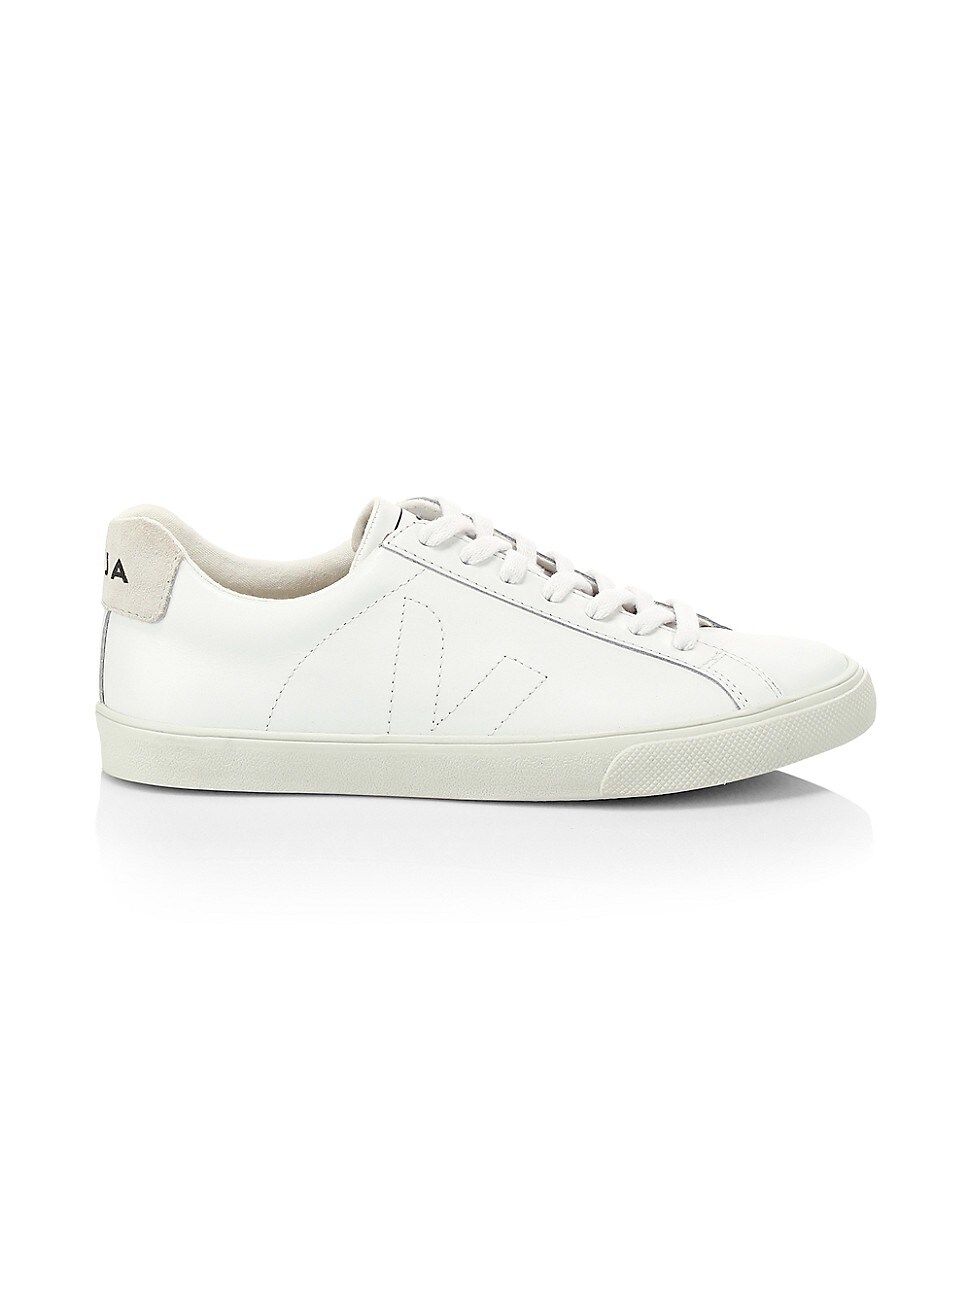 Veja Women's Esplar Leather Low-Top Sneakers - White - Size 5 | Saks Fifth Avenue